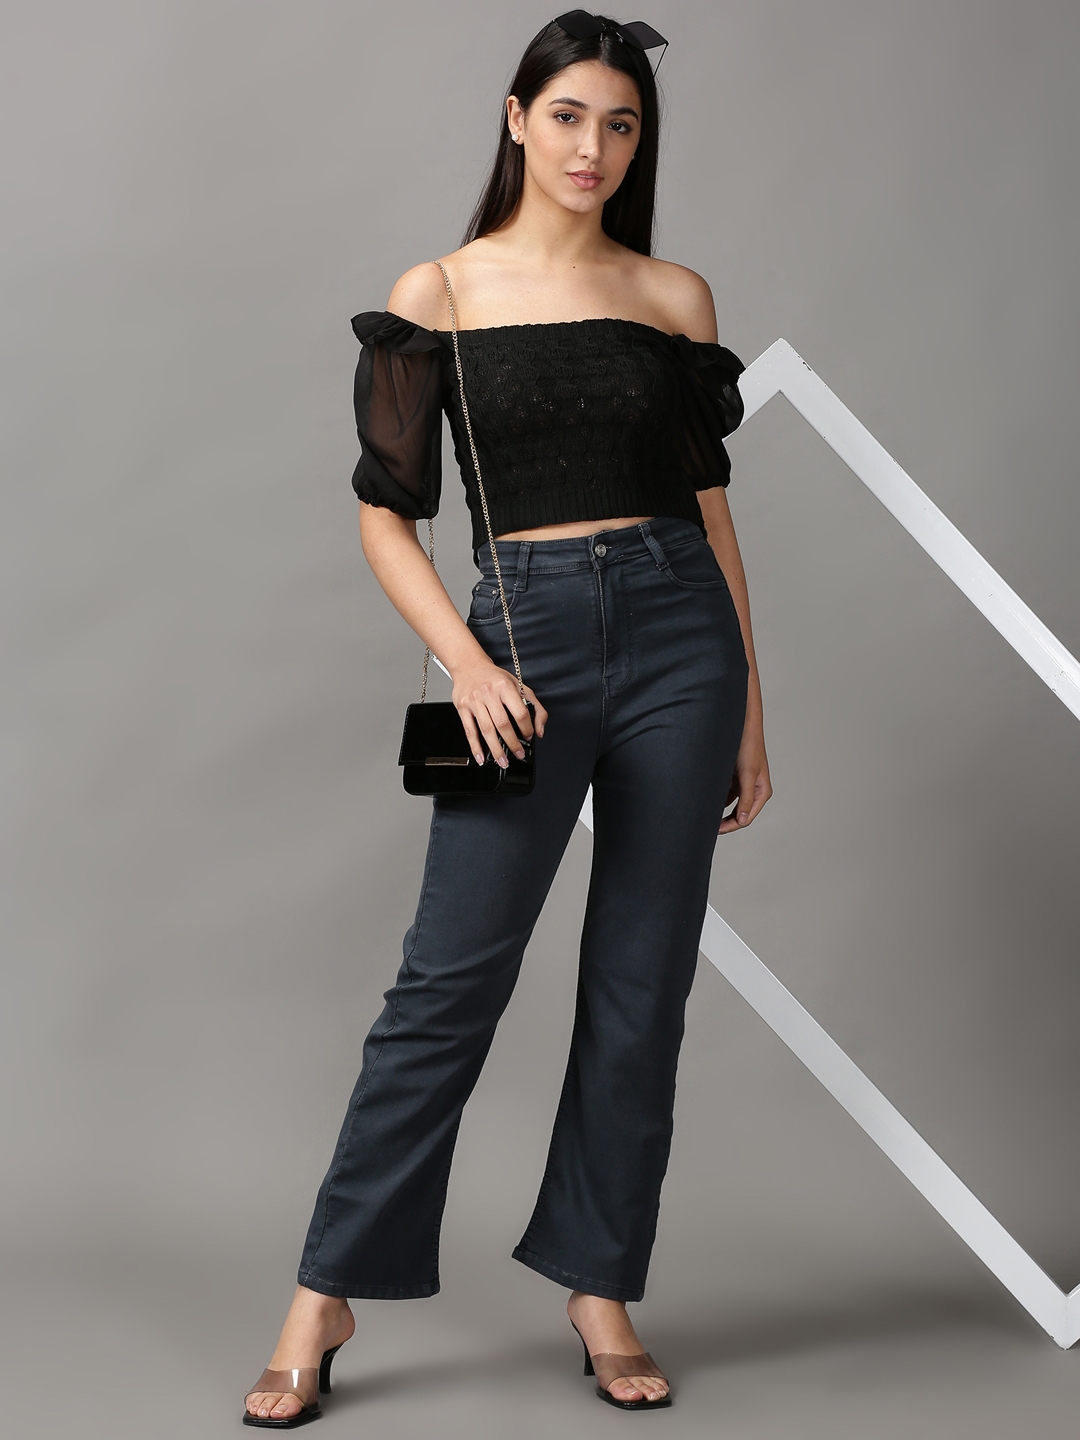 SHOWOFF Women's Self Design Sleeveless Black Bralette Crop Top